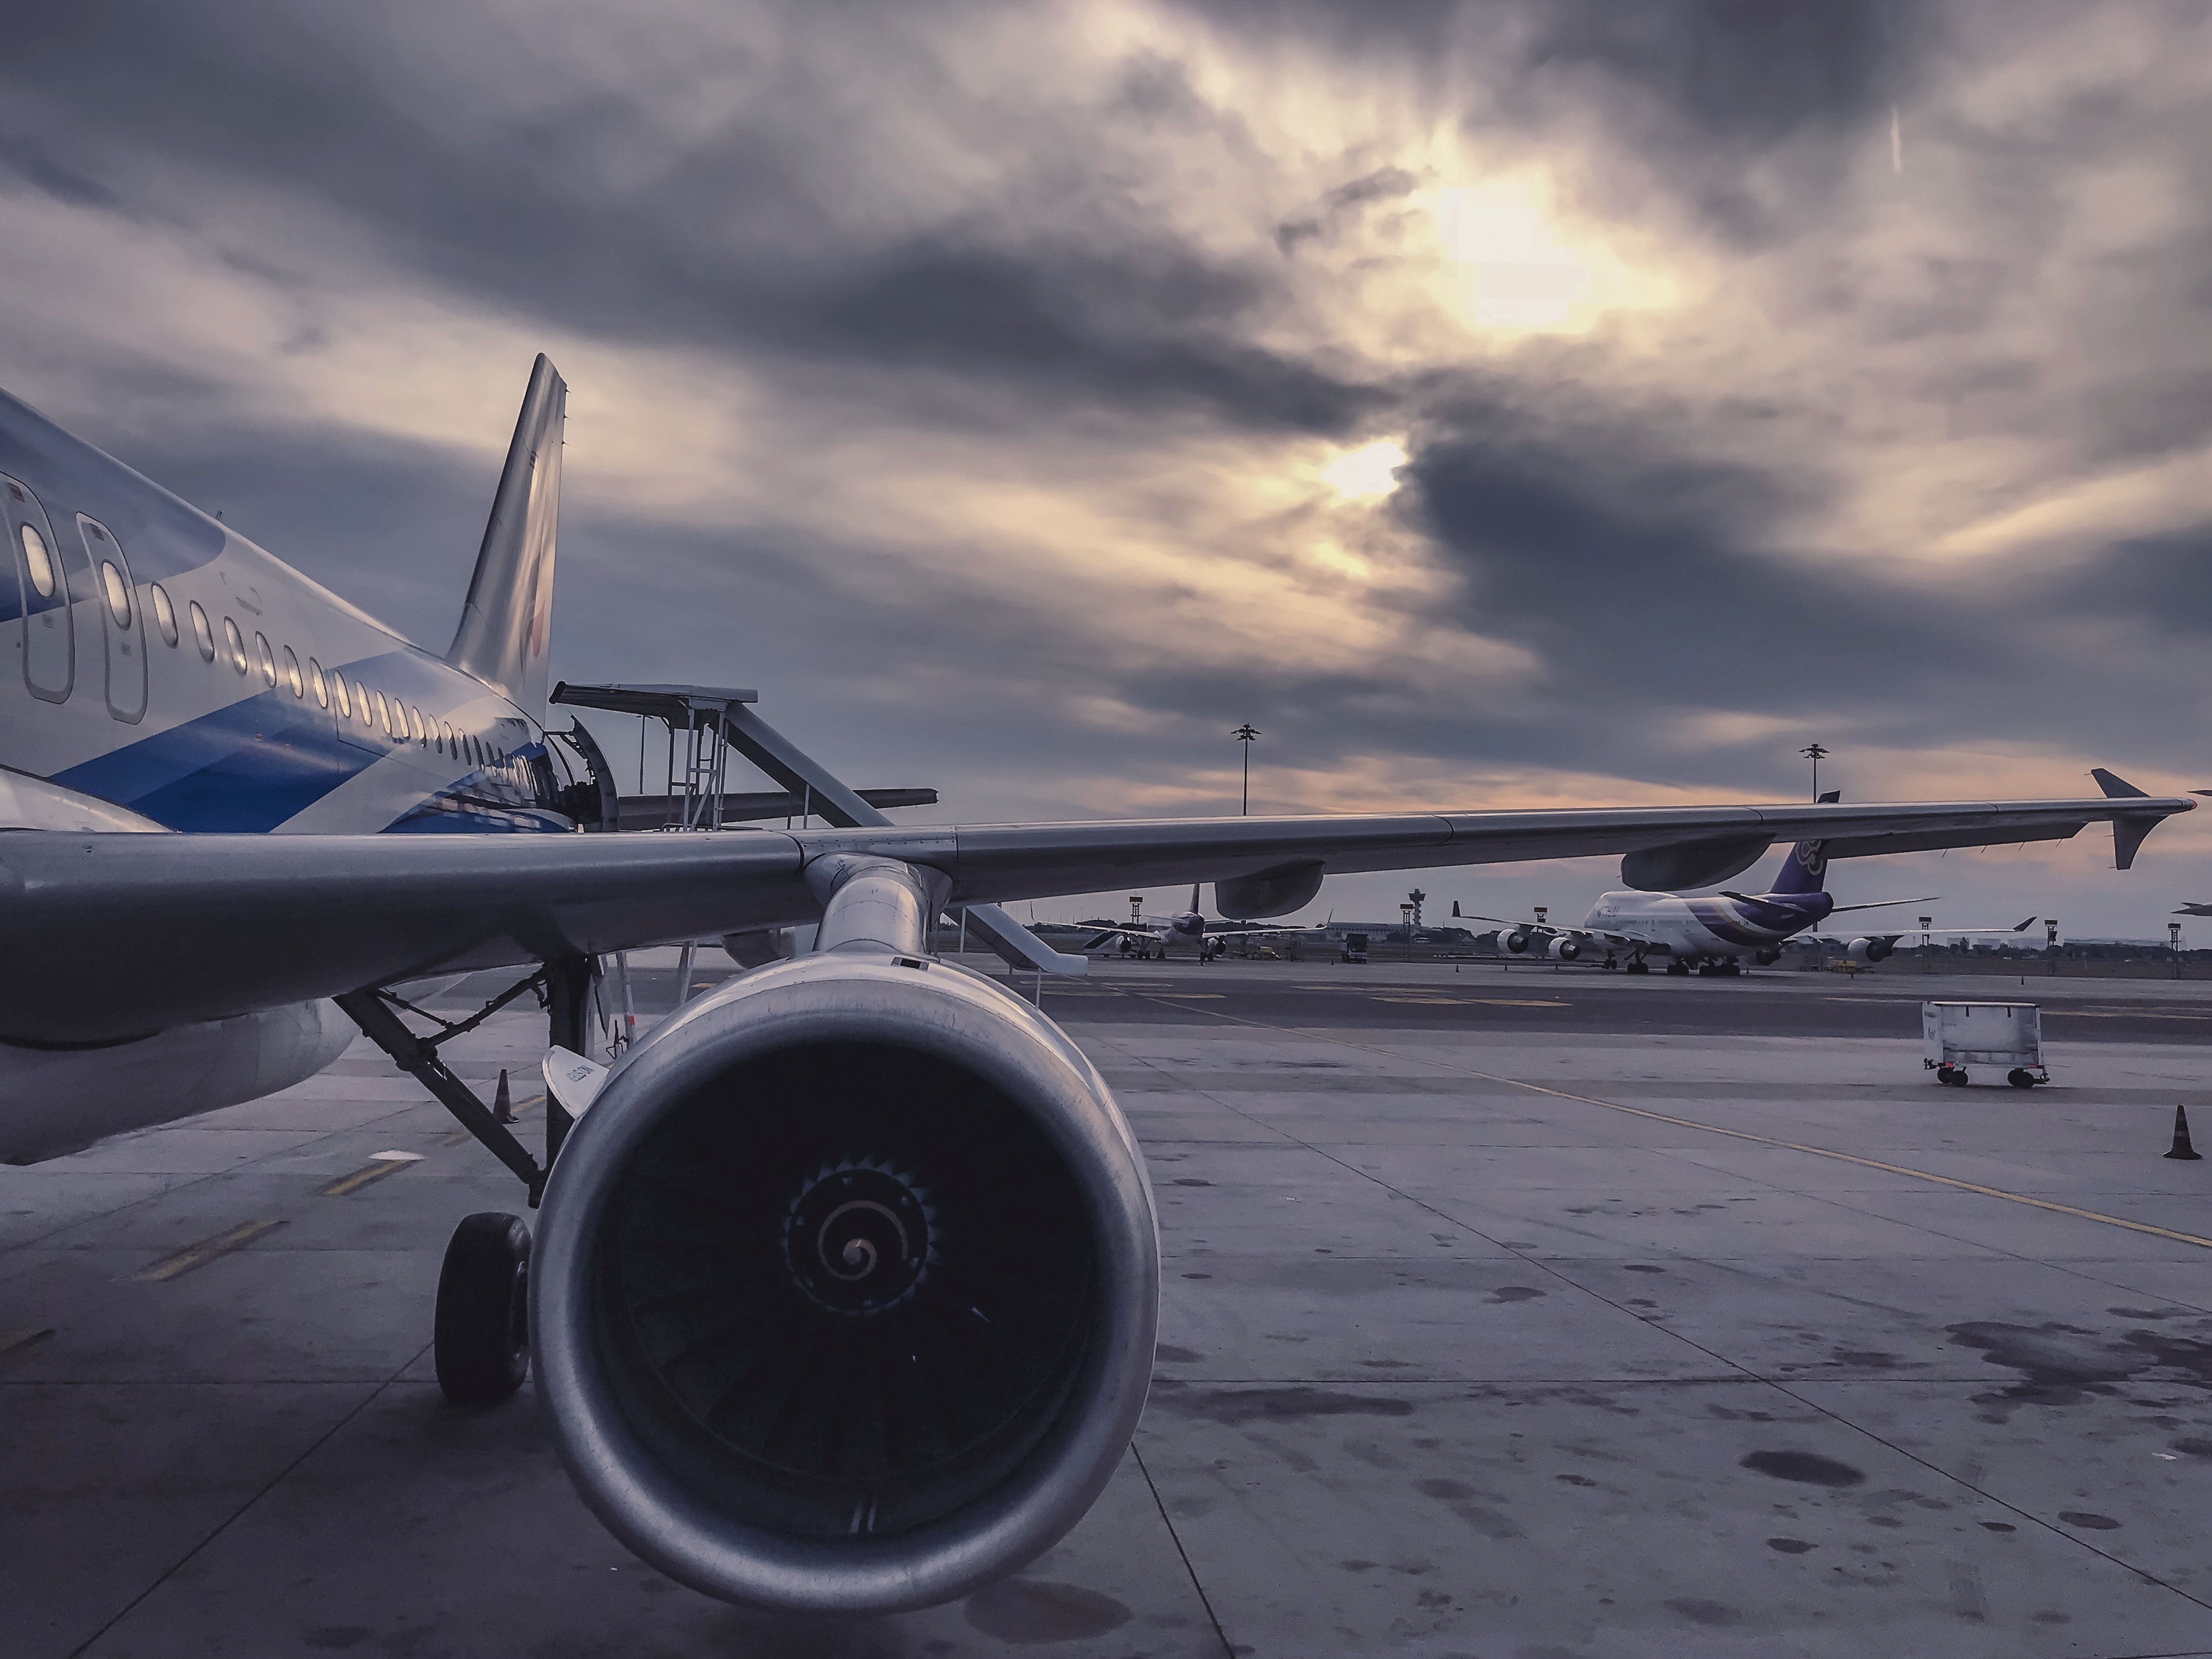 Gray Airliner, Aeroplane, Plane, Vehicle, Travel, HQ Photo